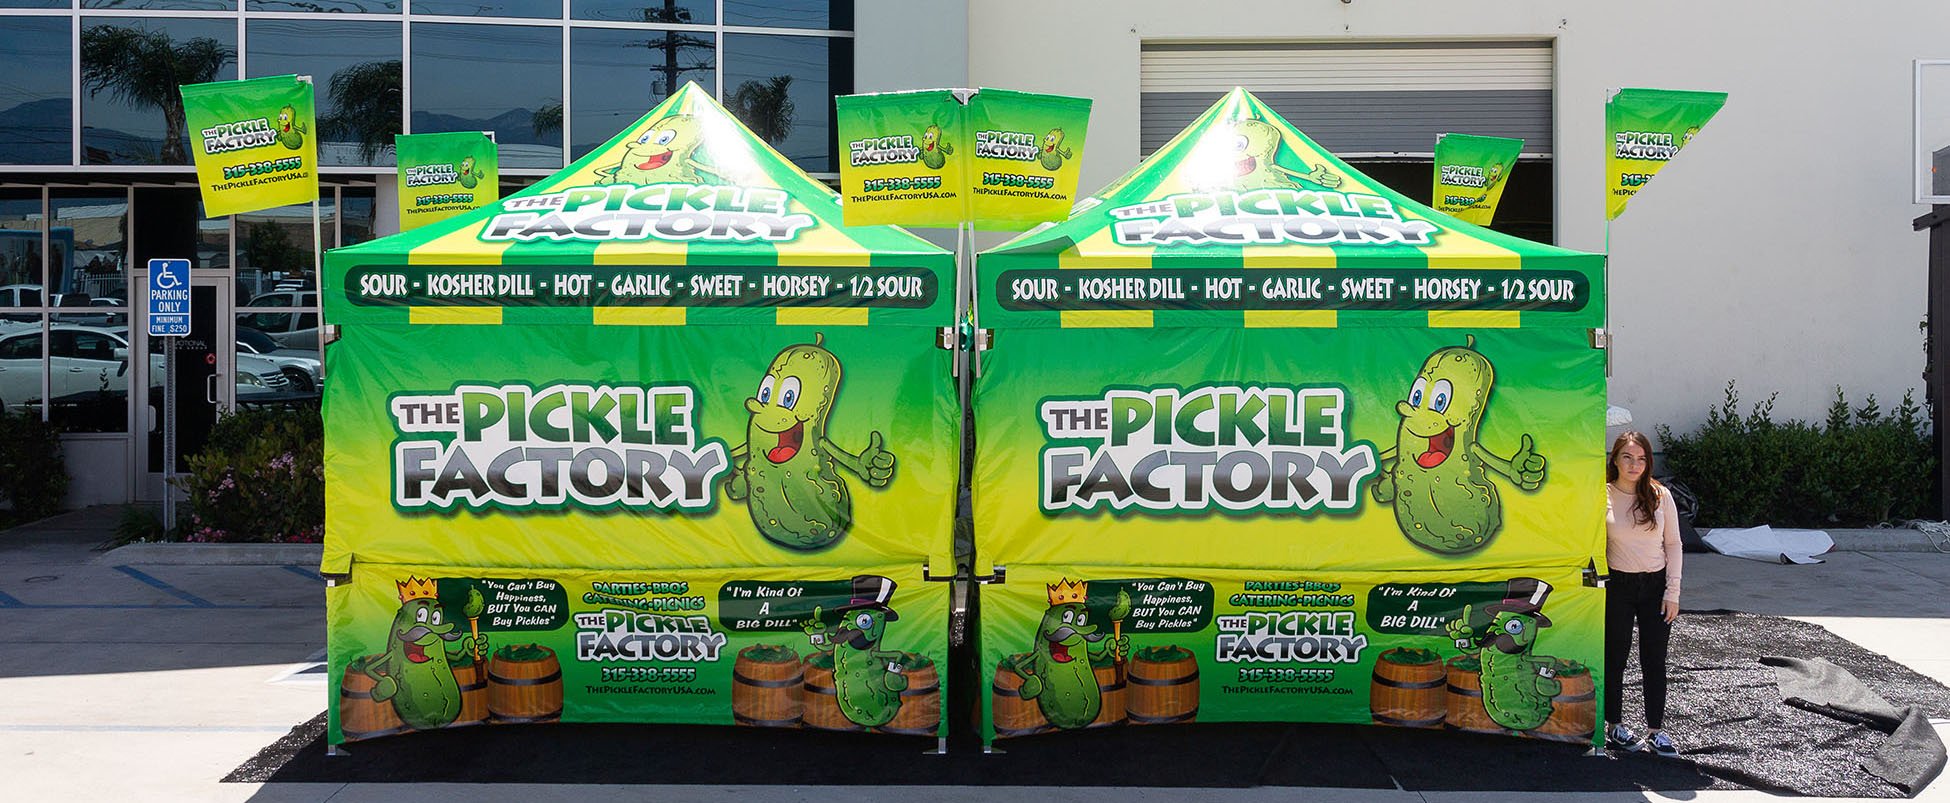 the-pickle-factory-header.jpg